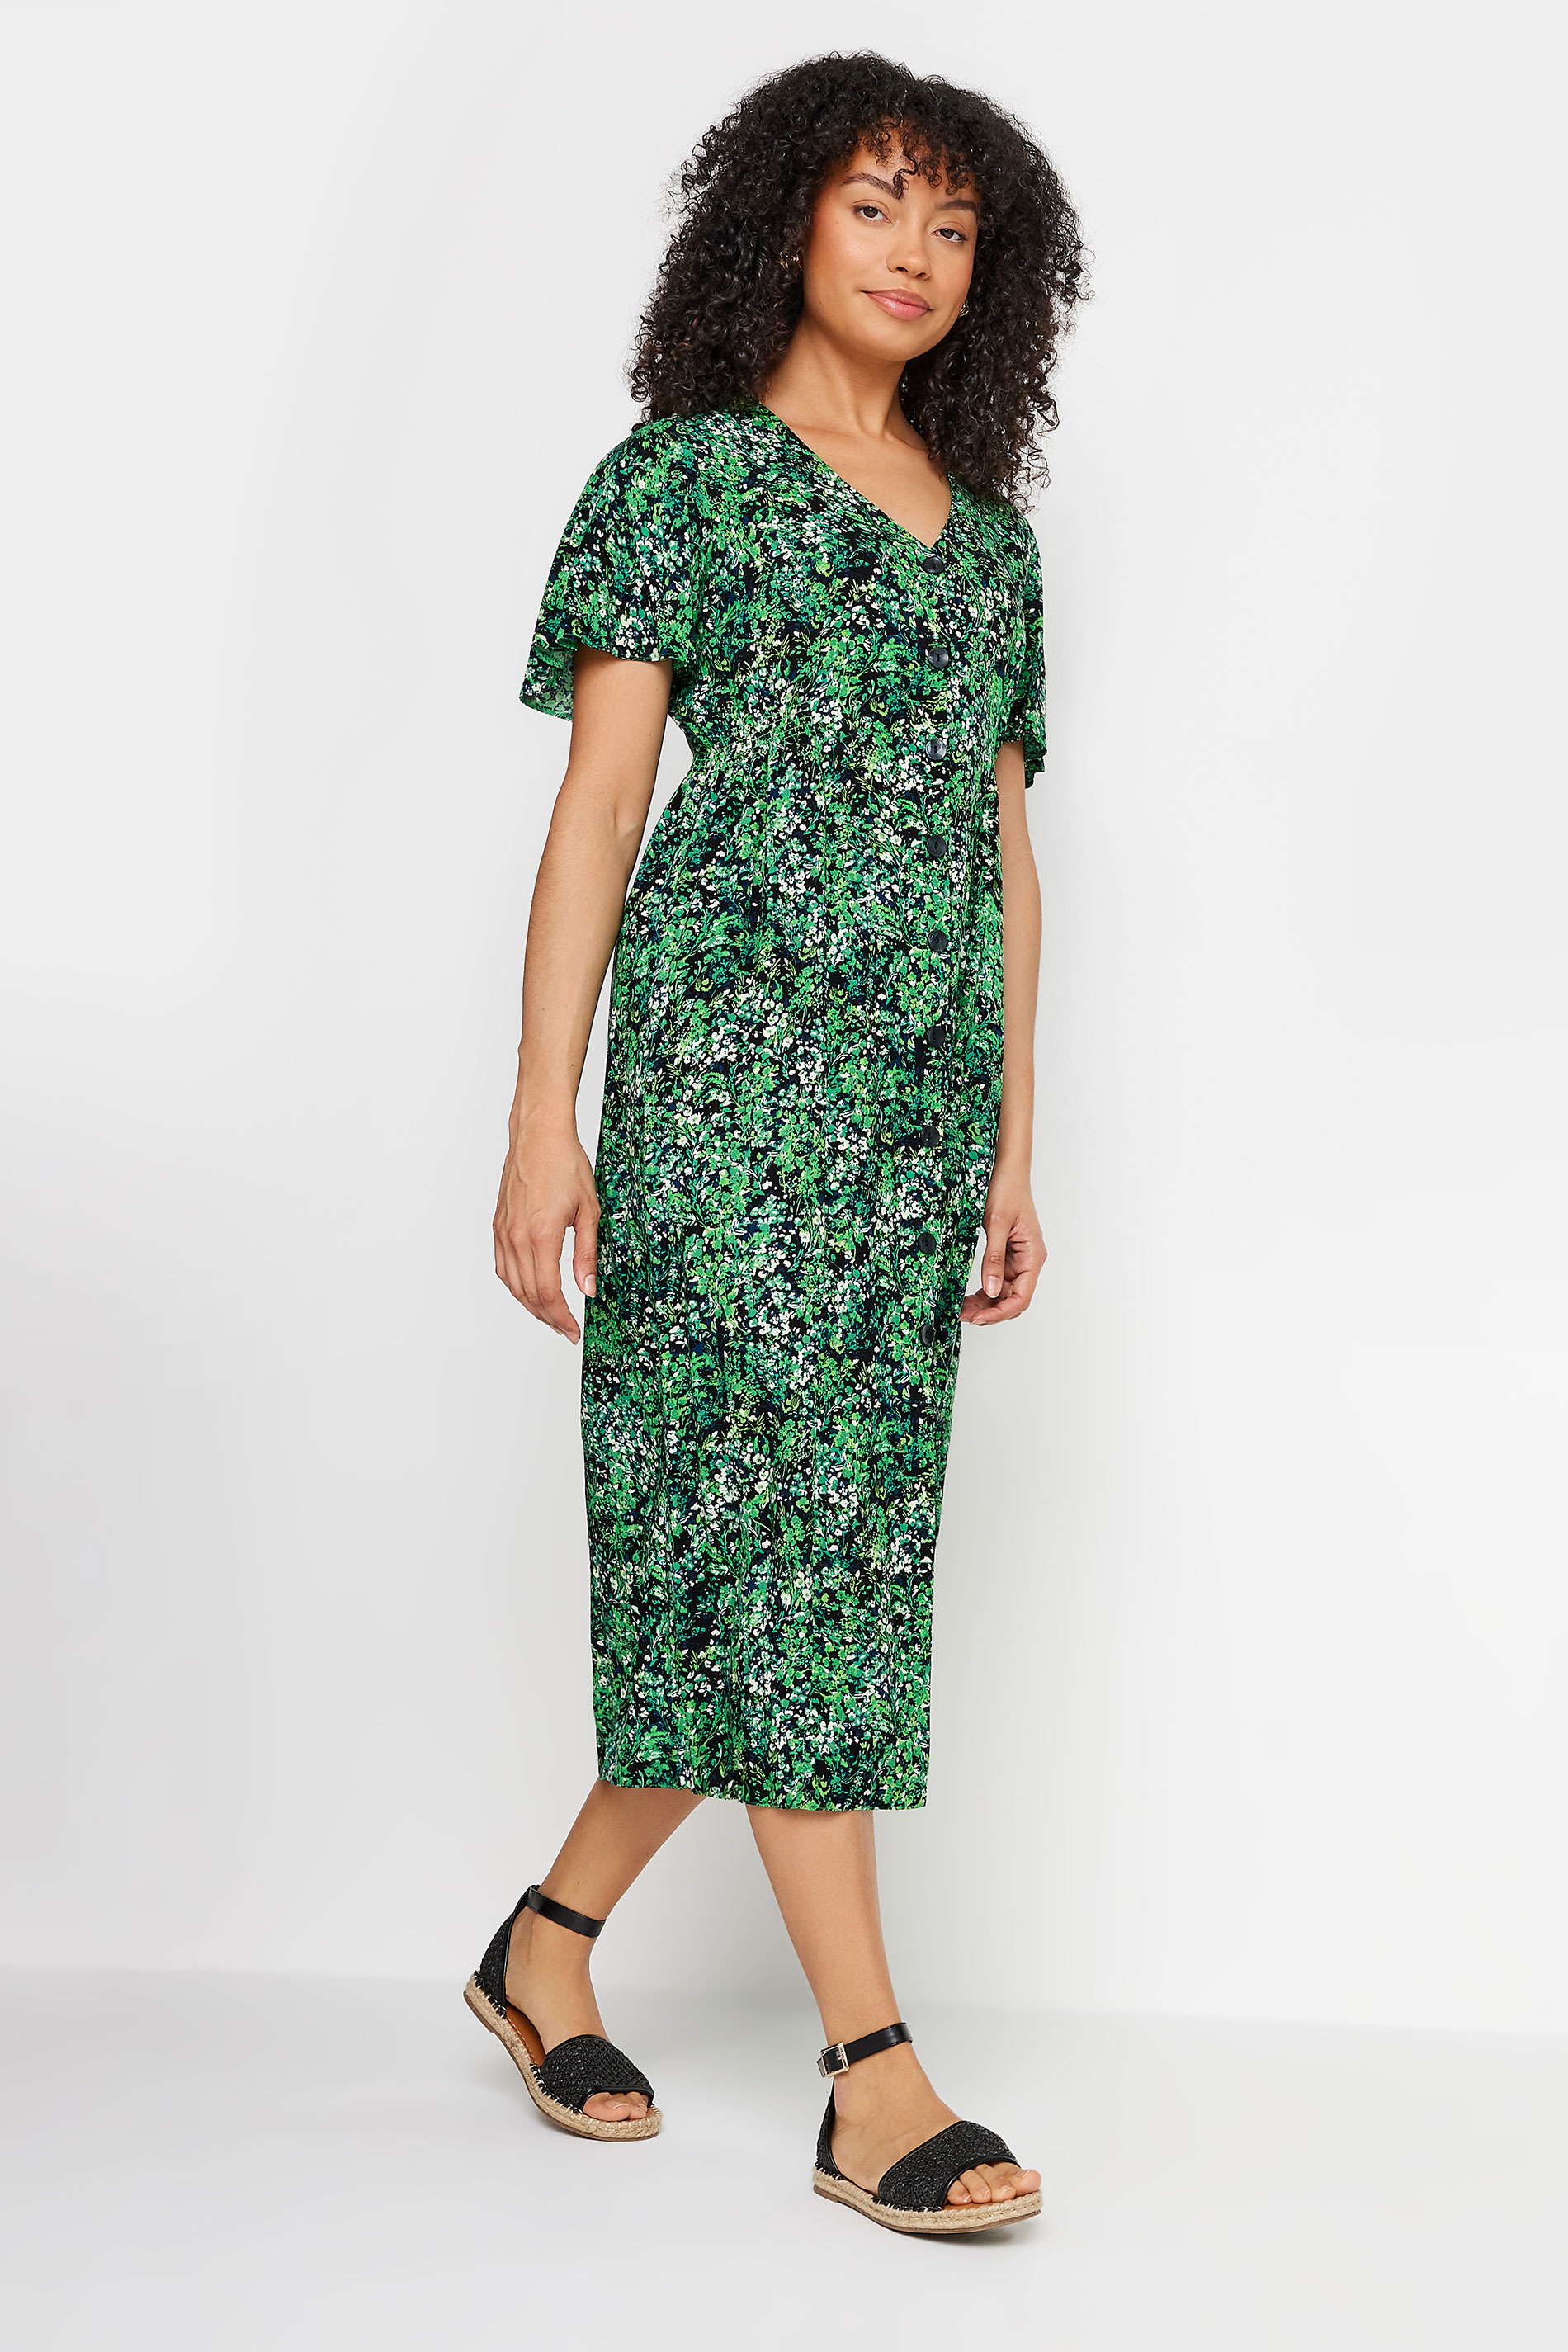 M&Co Green Floral Print Button Through Midi Tea Dress | M&Co 2